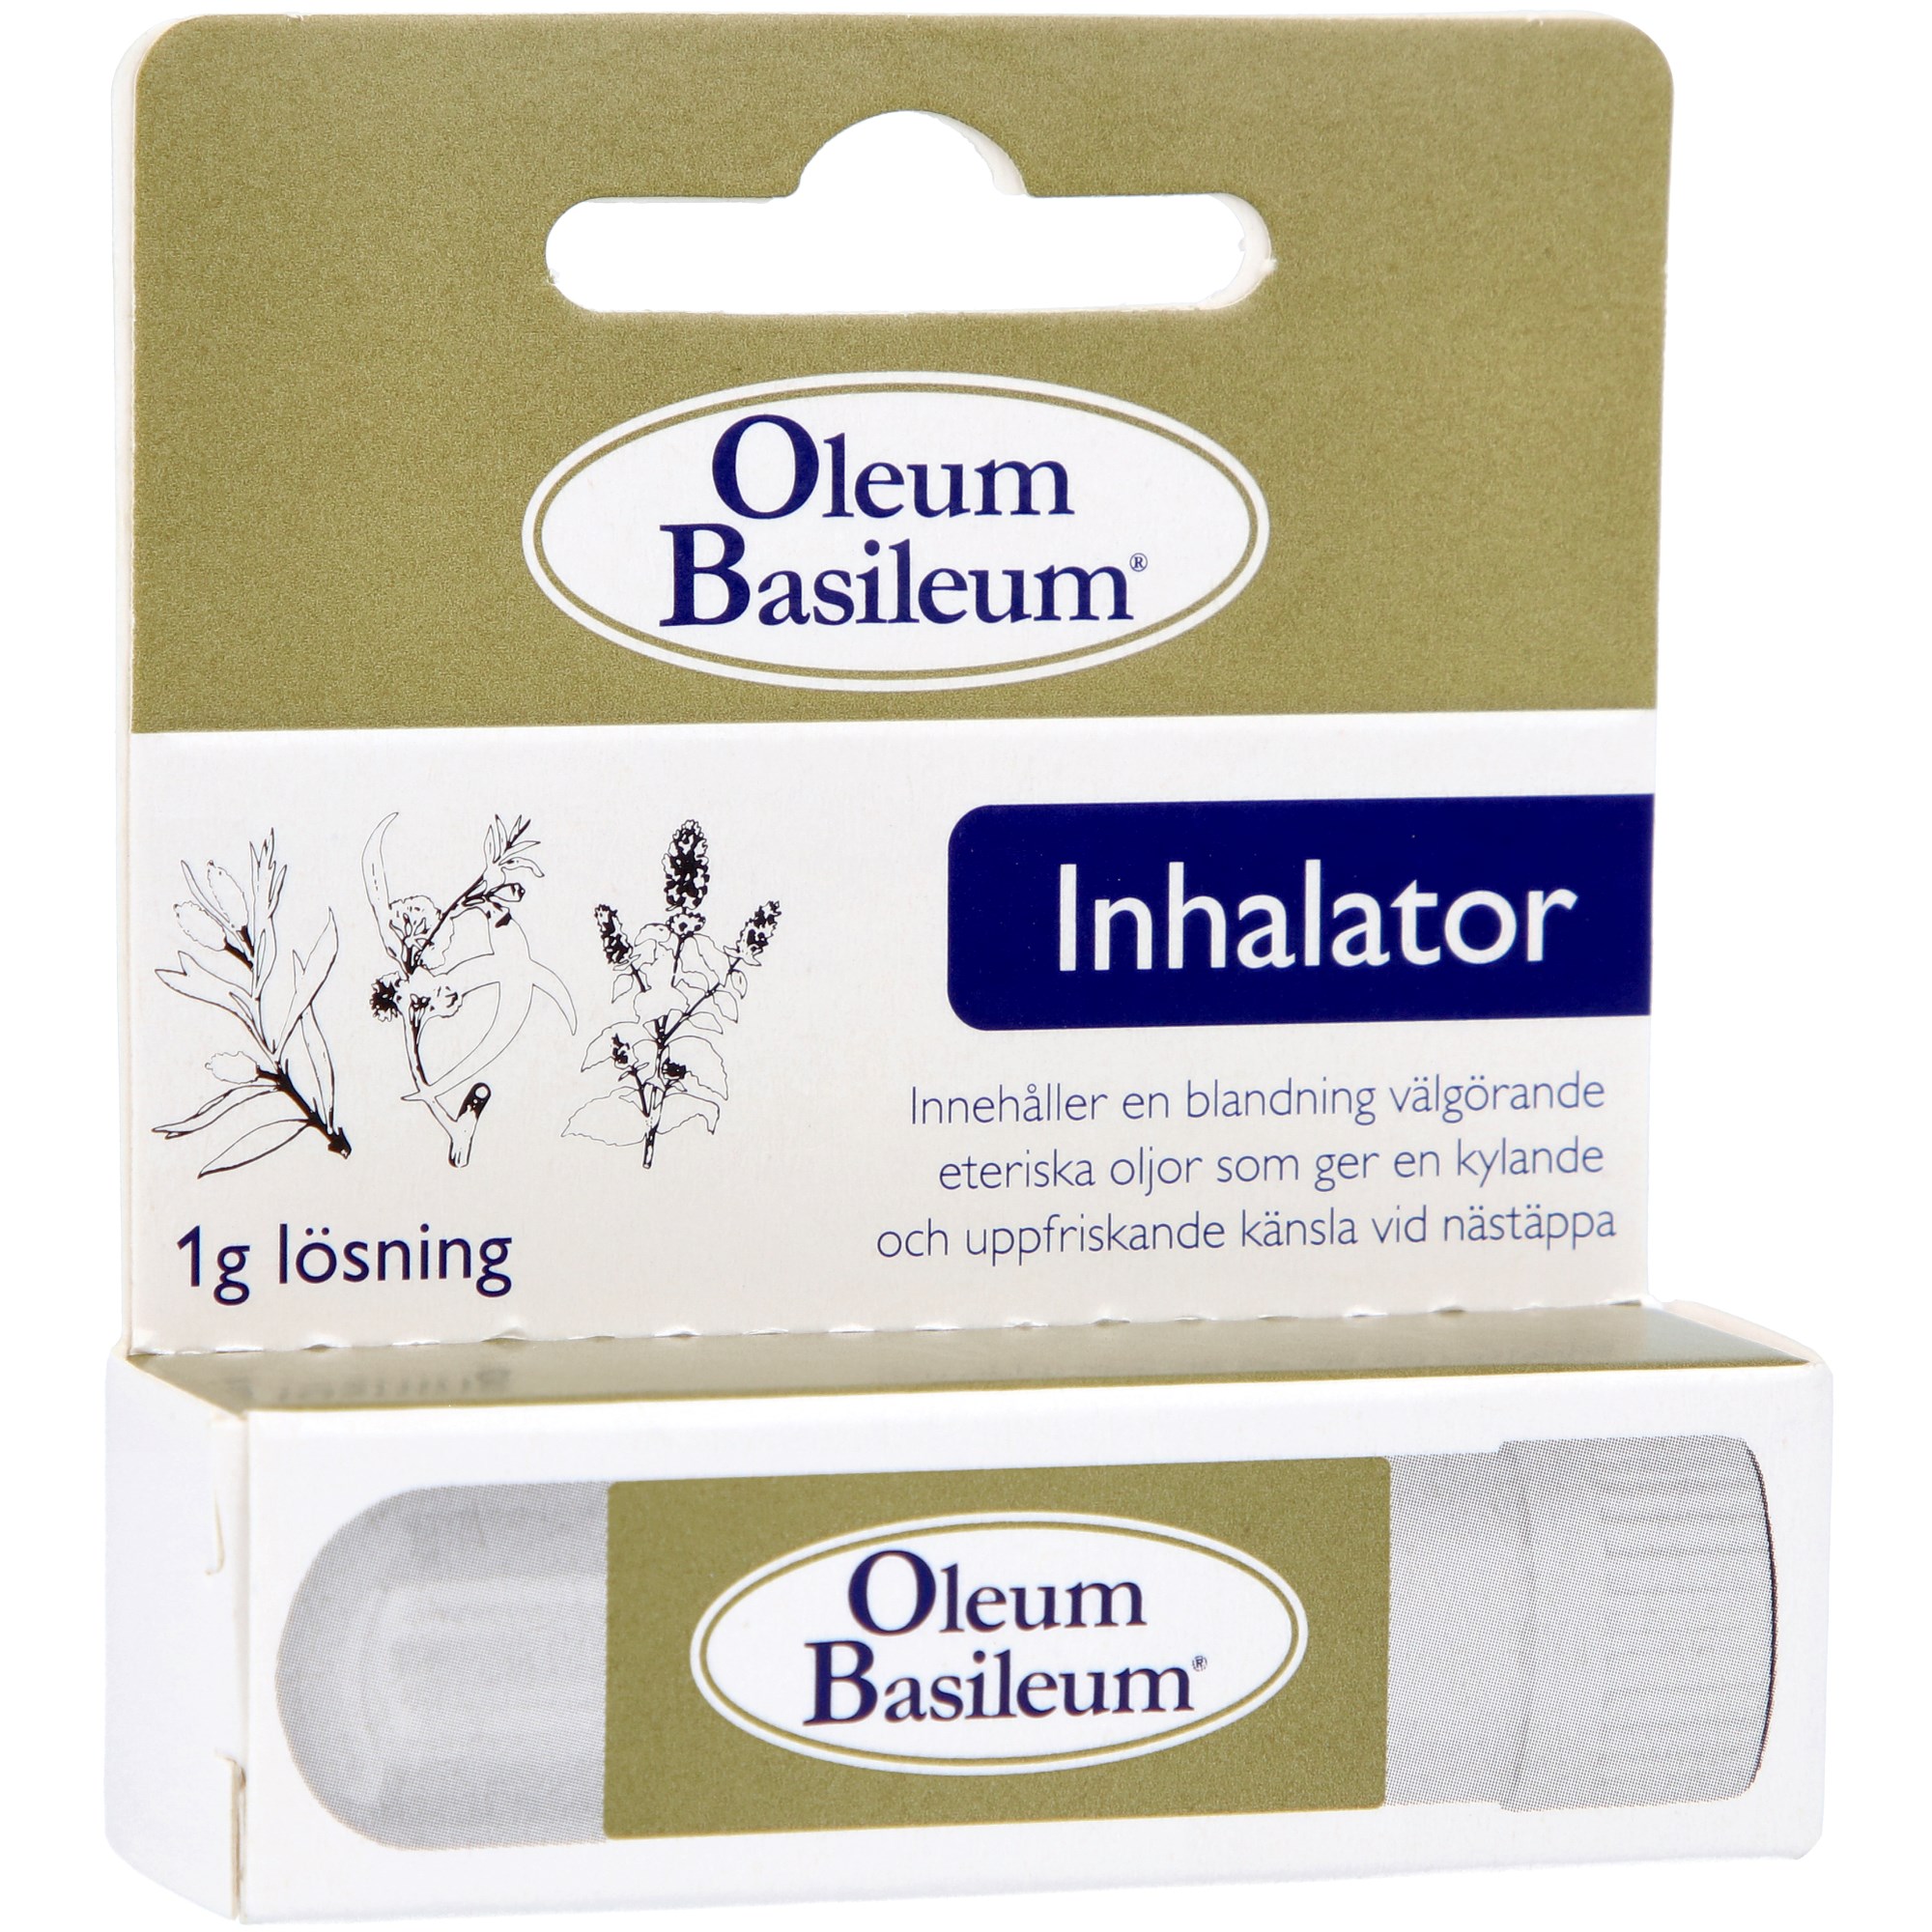 Oleum Basileum Basileum Inhalator